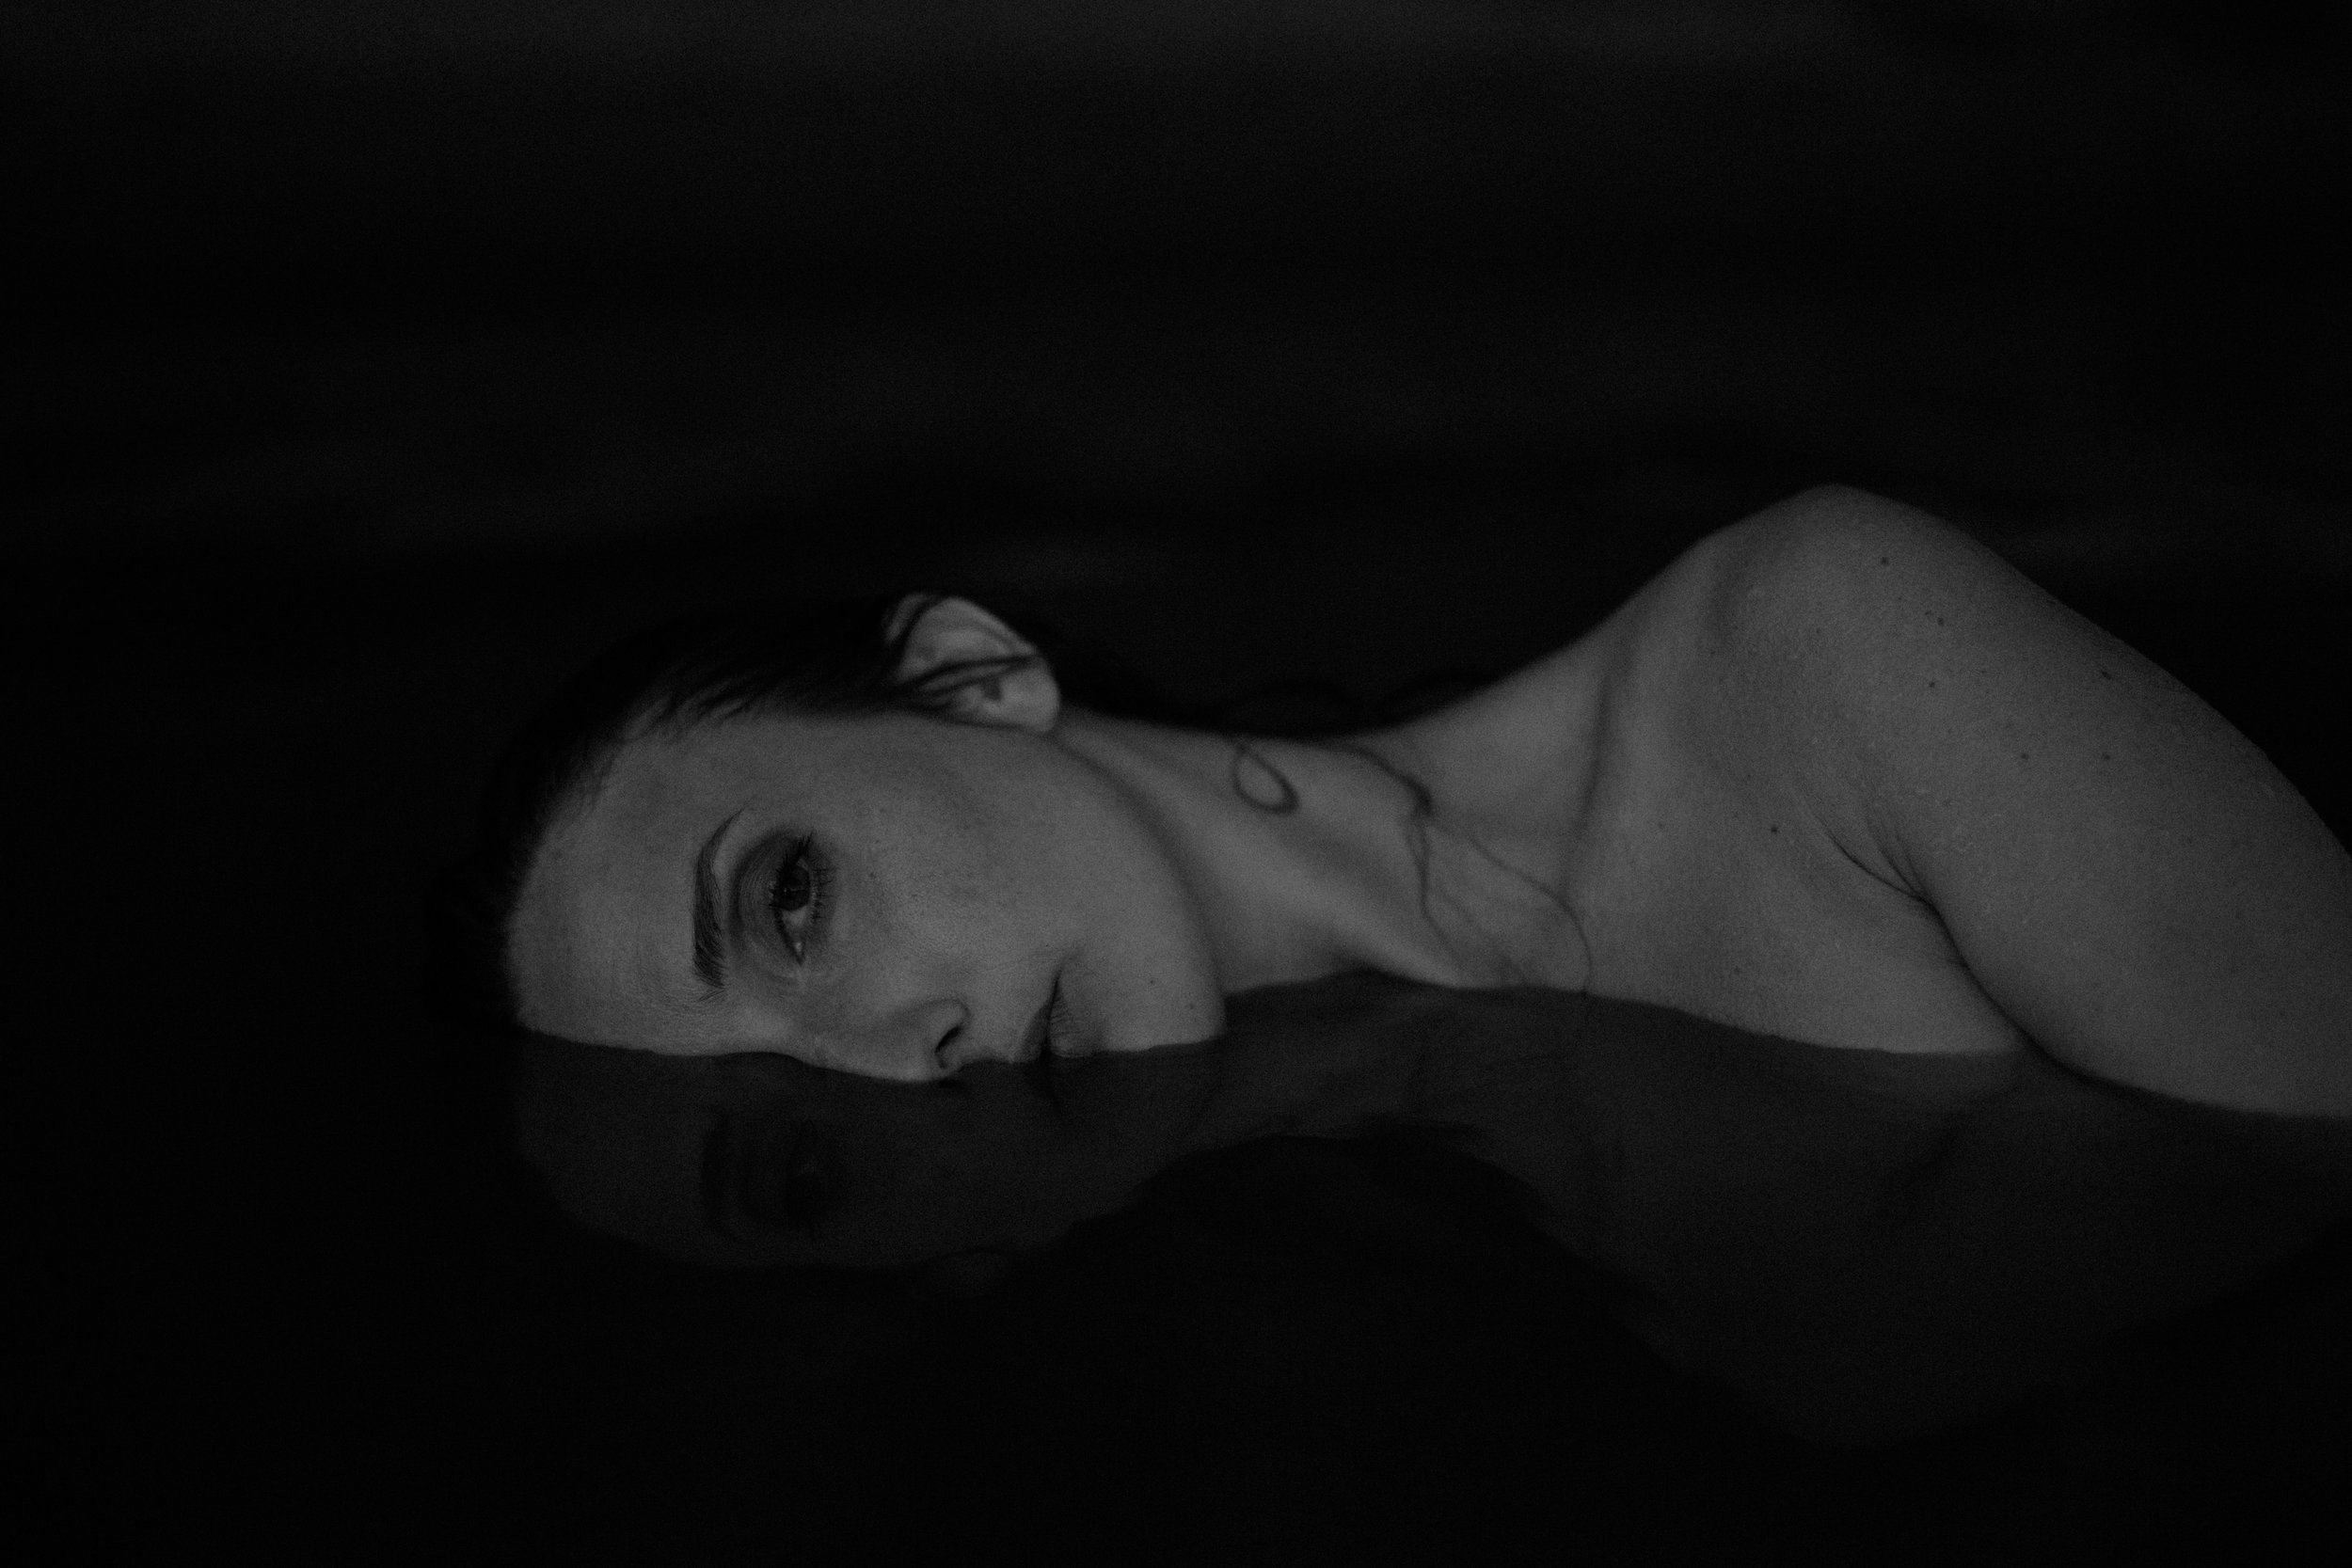 outdoor intimate portrait. black and white. boudoir inspiration. underwater nude. underwater boudoir. art model. anoushanou. ohio boudoir photographer. sarah rose photography. i am sarah rose.